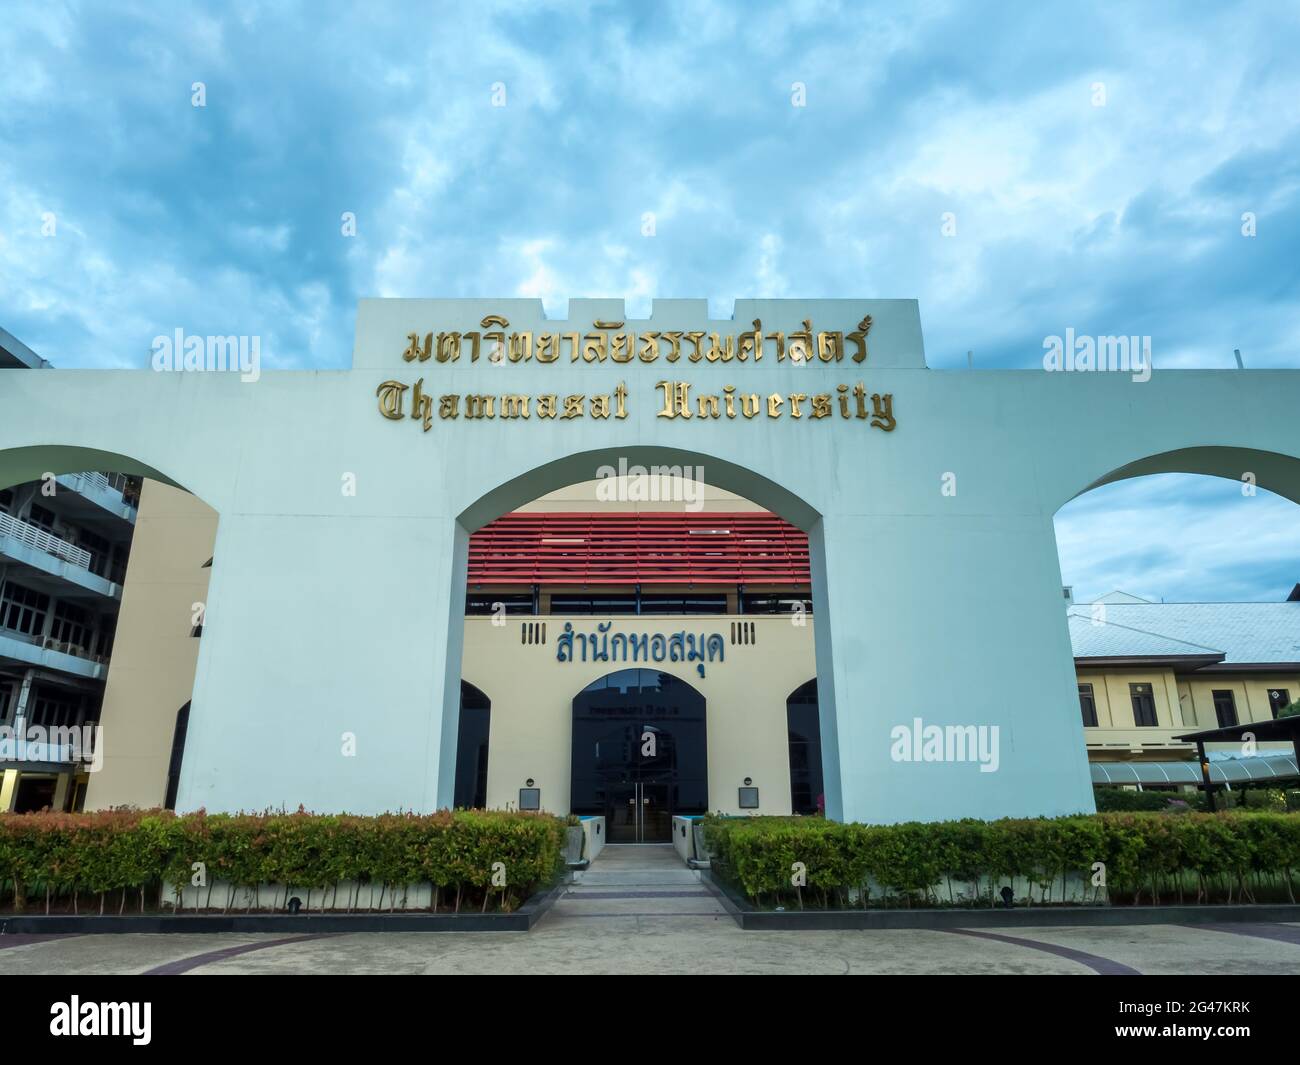 BANGOK - SEPTEMBER 9: Thammasart university library building under cloudy twilight sky in Bangkok, Thailand, was taken on September 9, 2015. Stock Photo